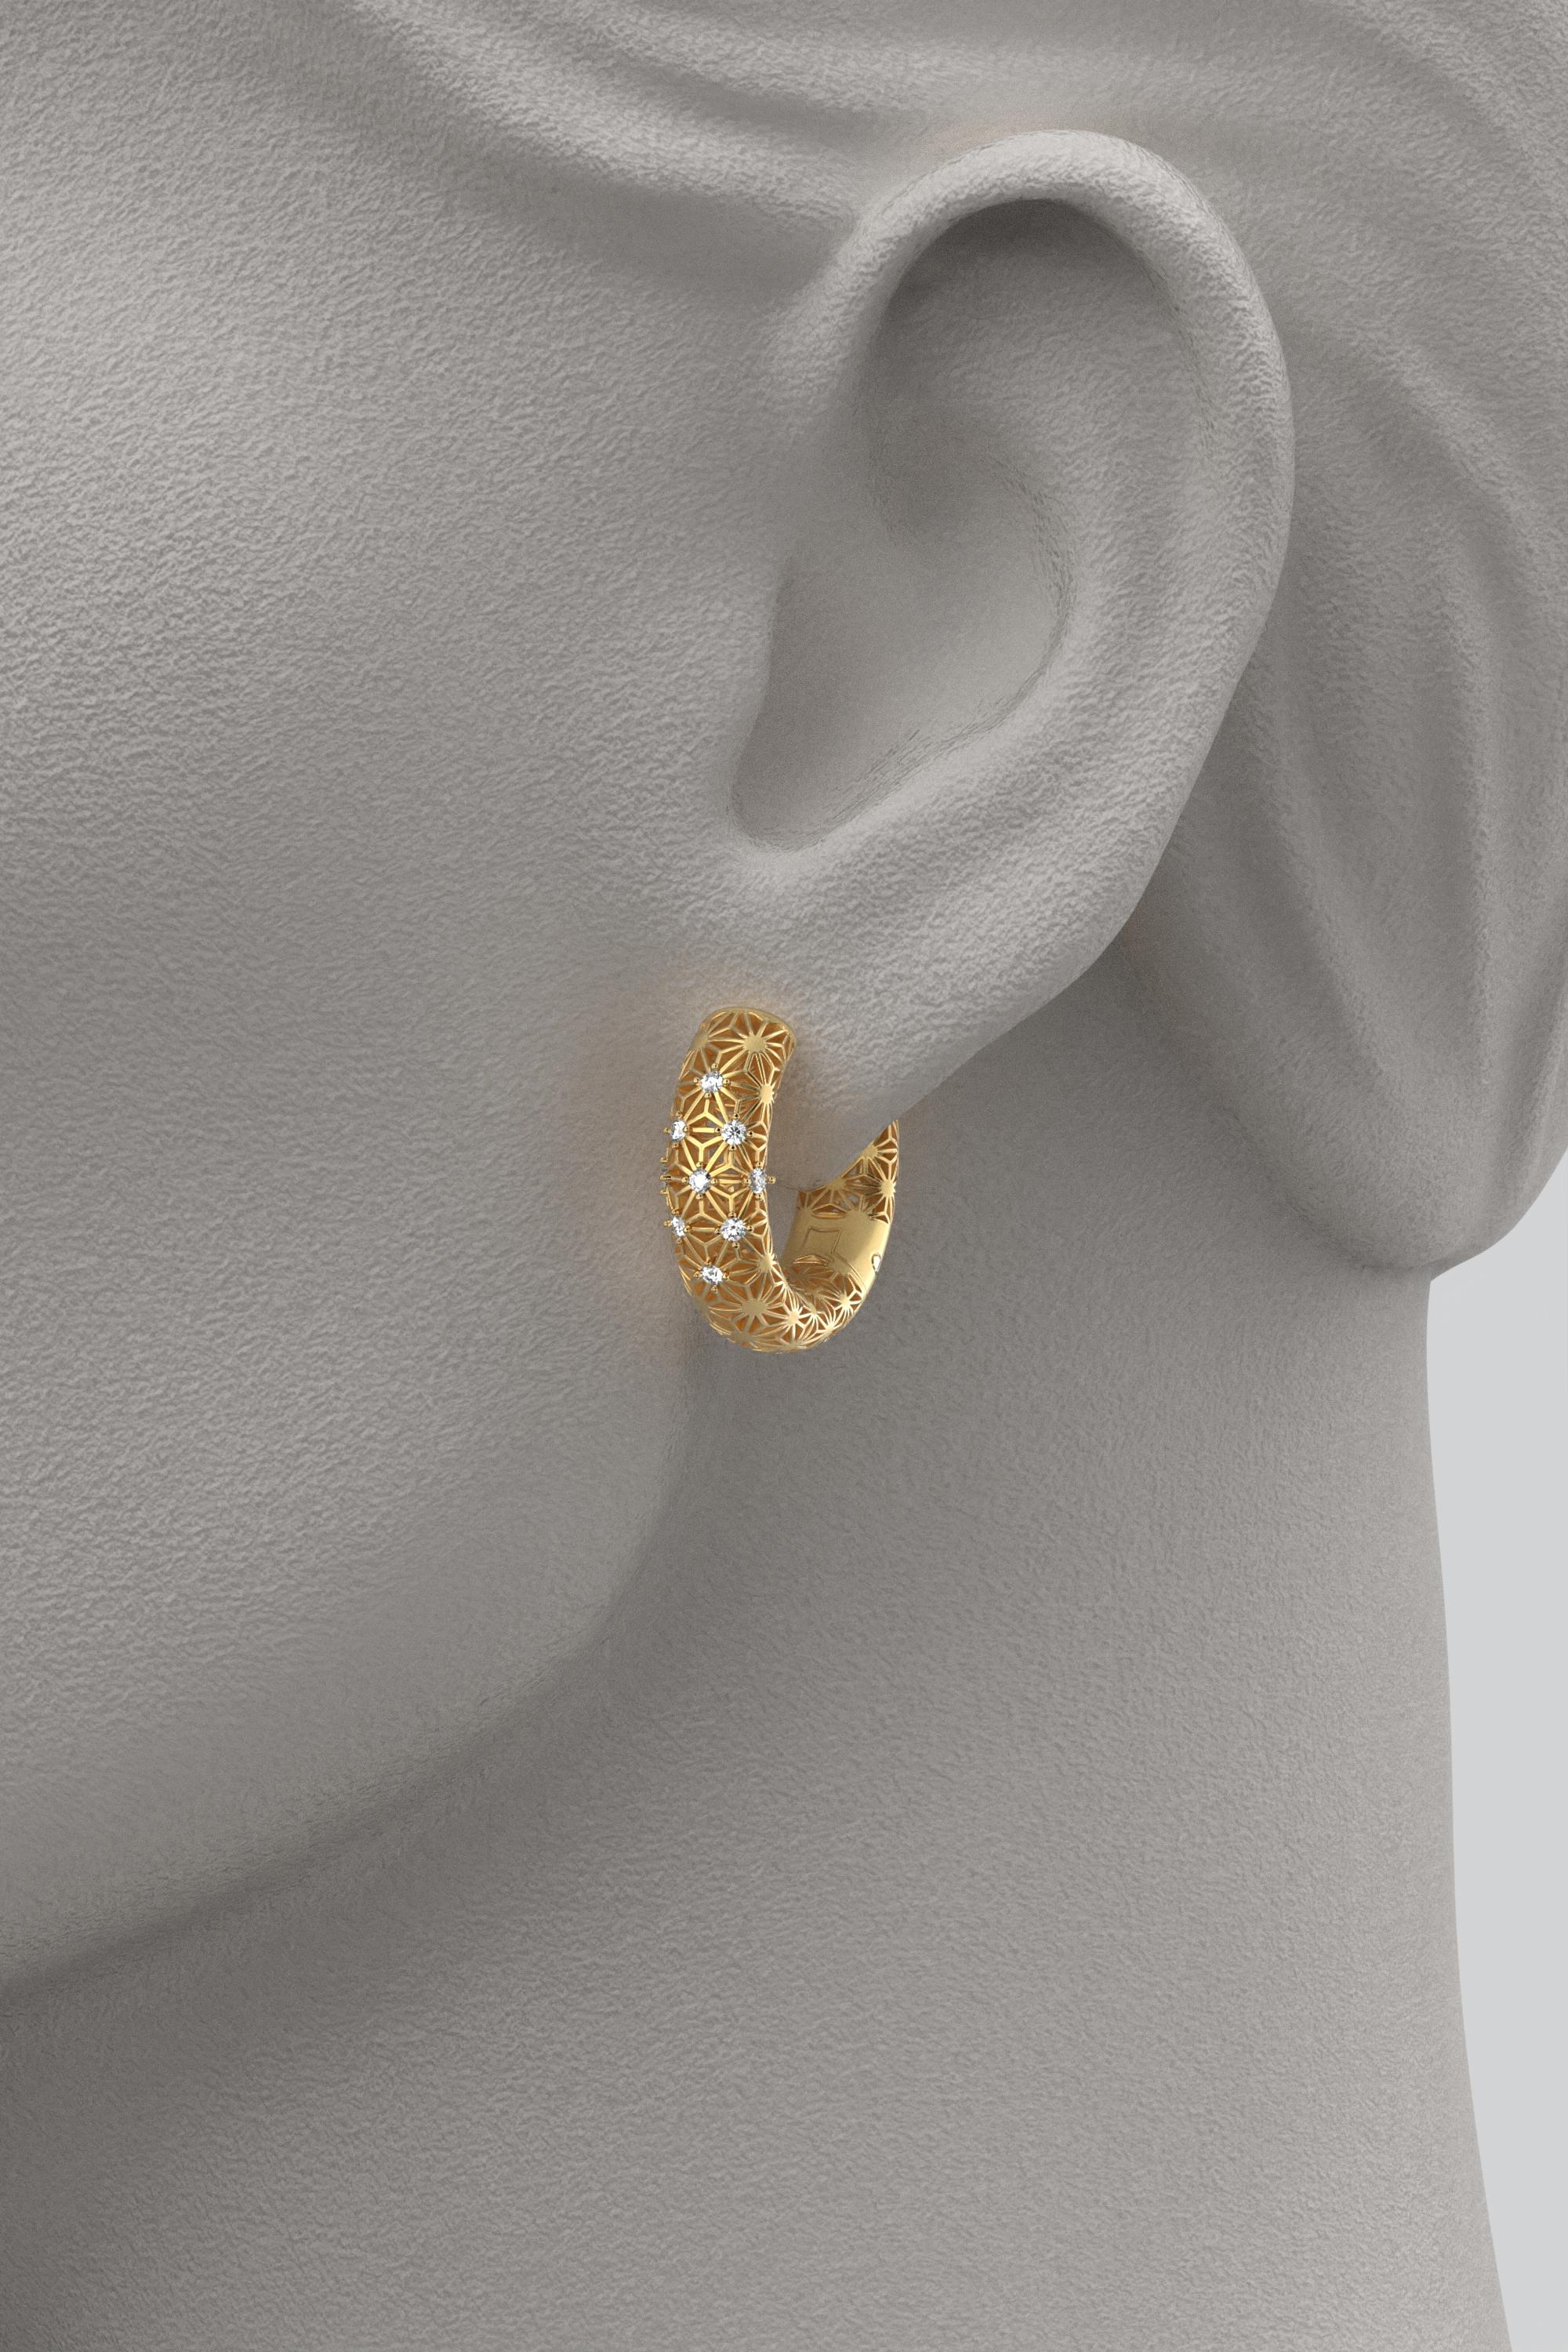 Brilliant Cut Italian 18K Gold Diamond Hoop Earrings Sashiko Pattern - Oltremare Gioielli For Sale